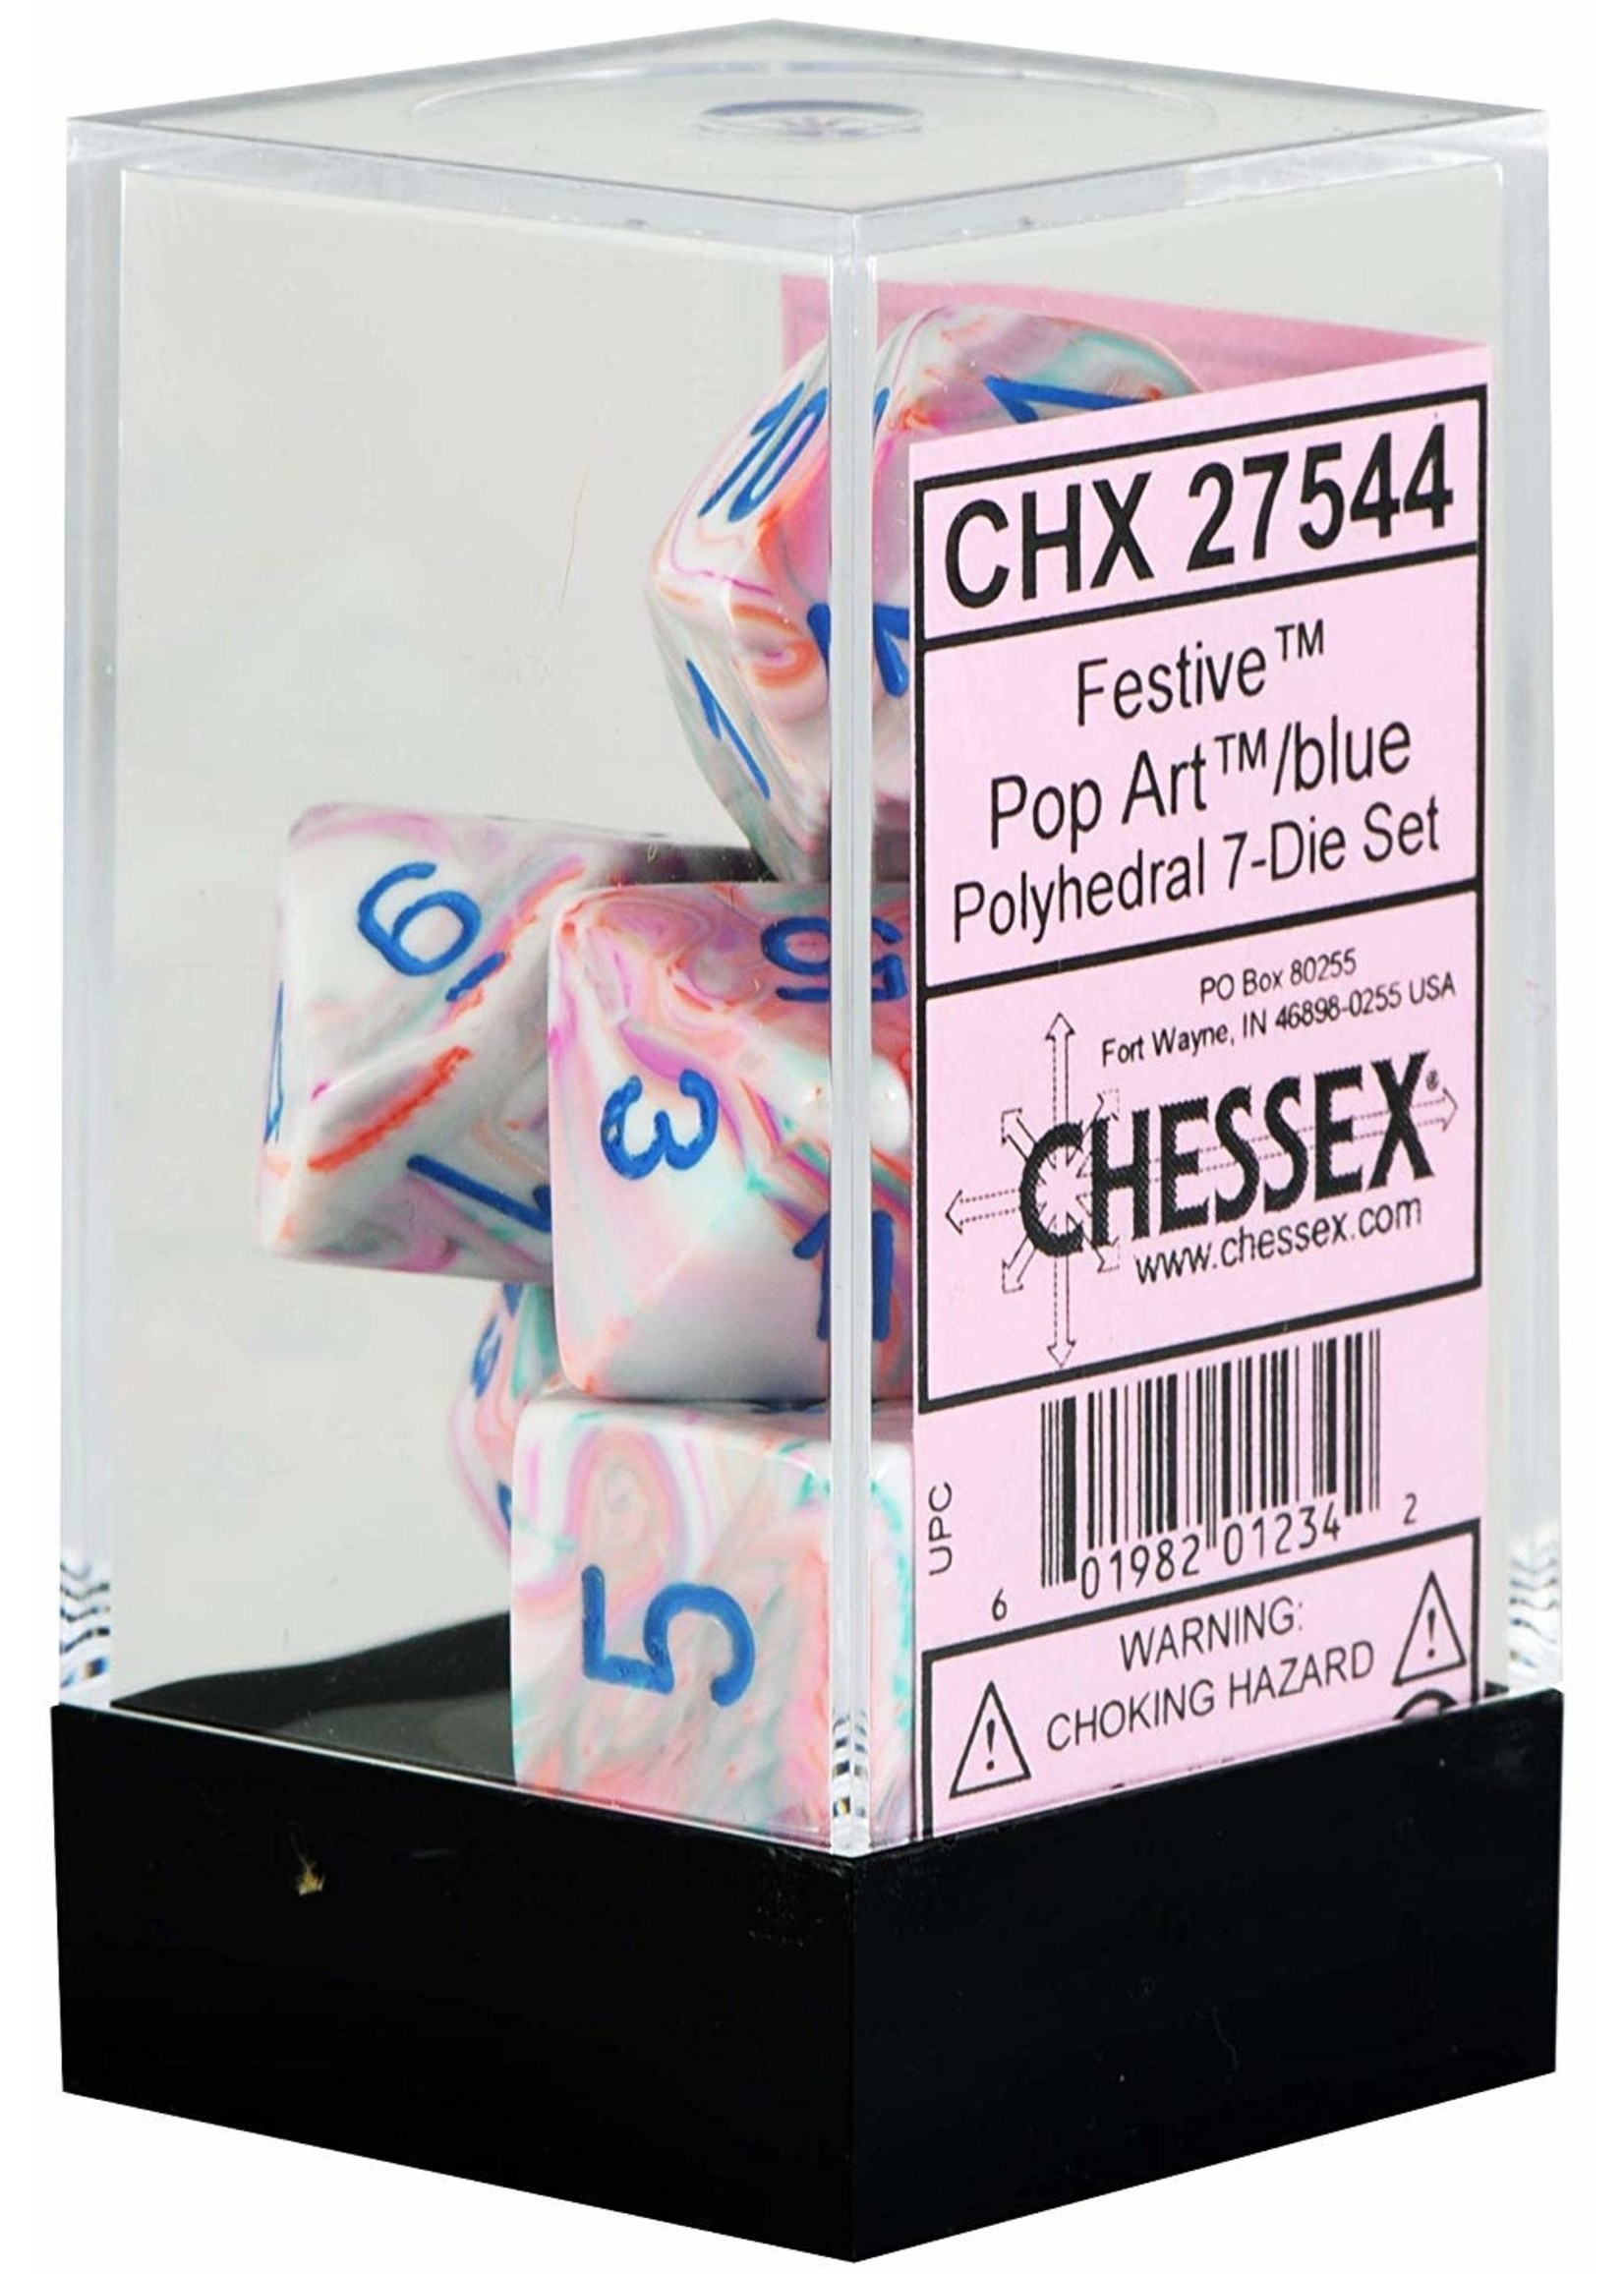 Chessex Festive Poly 7 set: Pop Art  w/ Blue